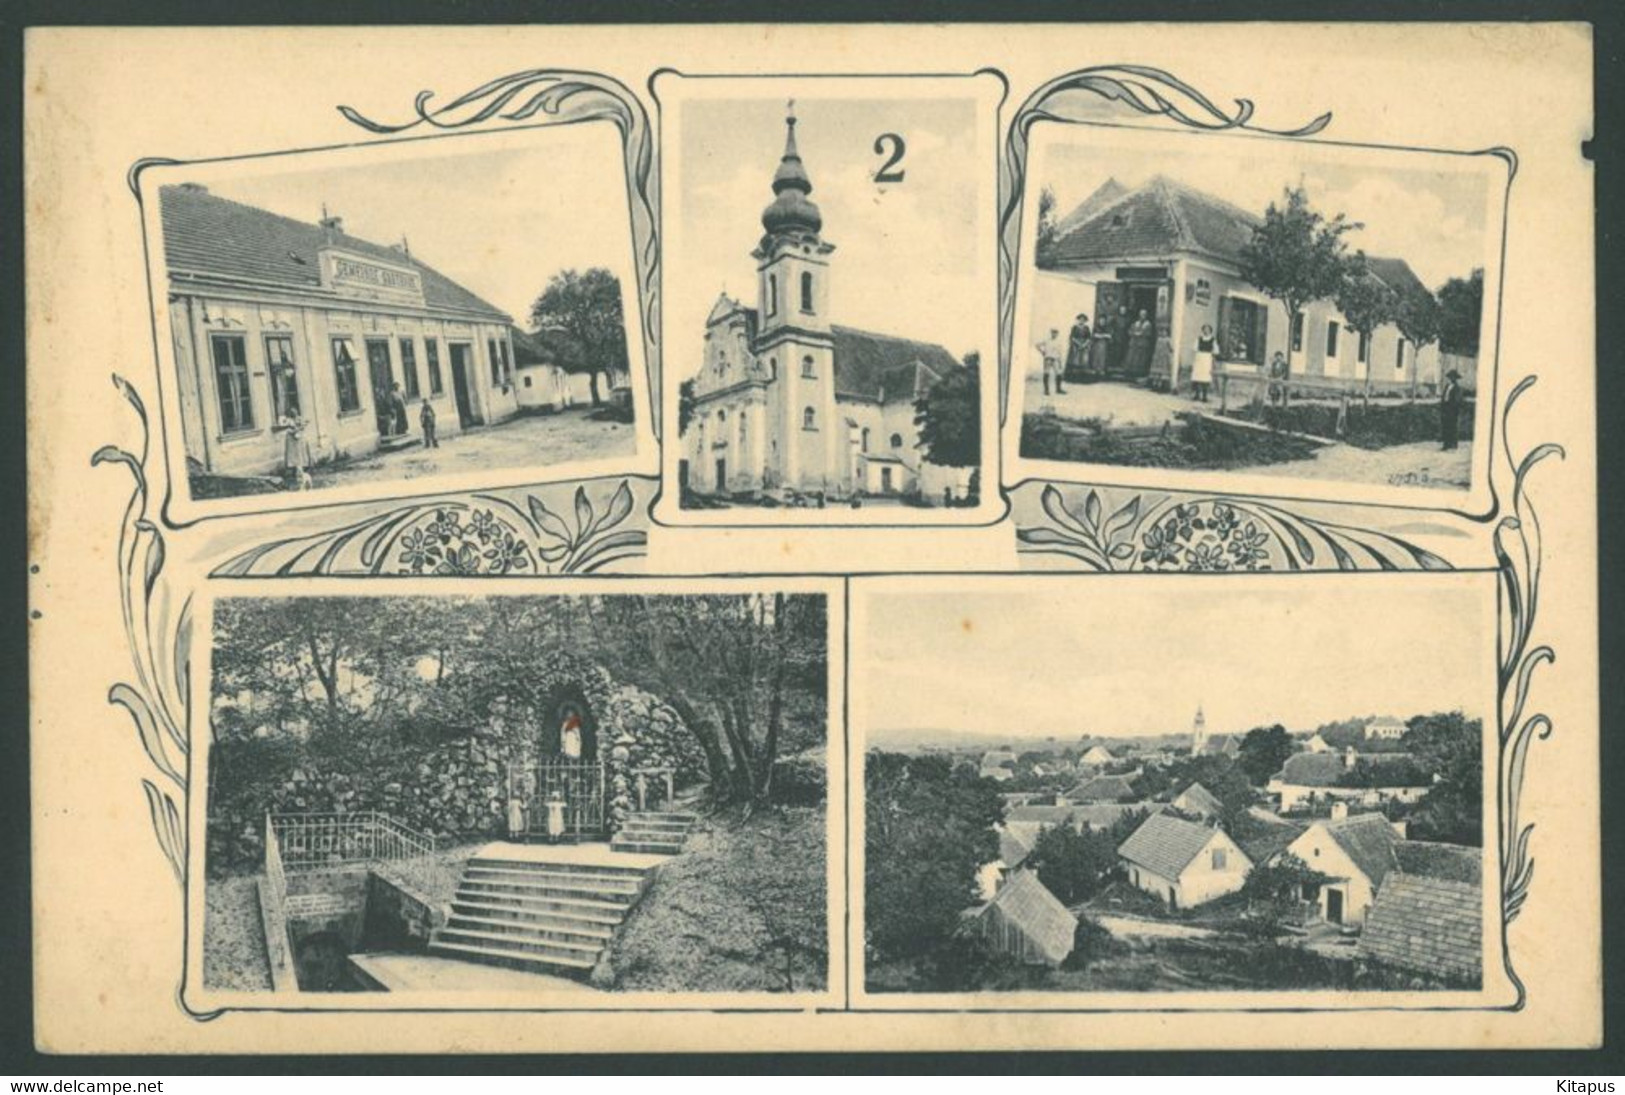 ALTRUPPERSDORF Vintage Postcard Paysdorf Austria - Poysdorf